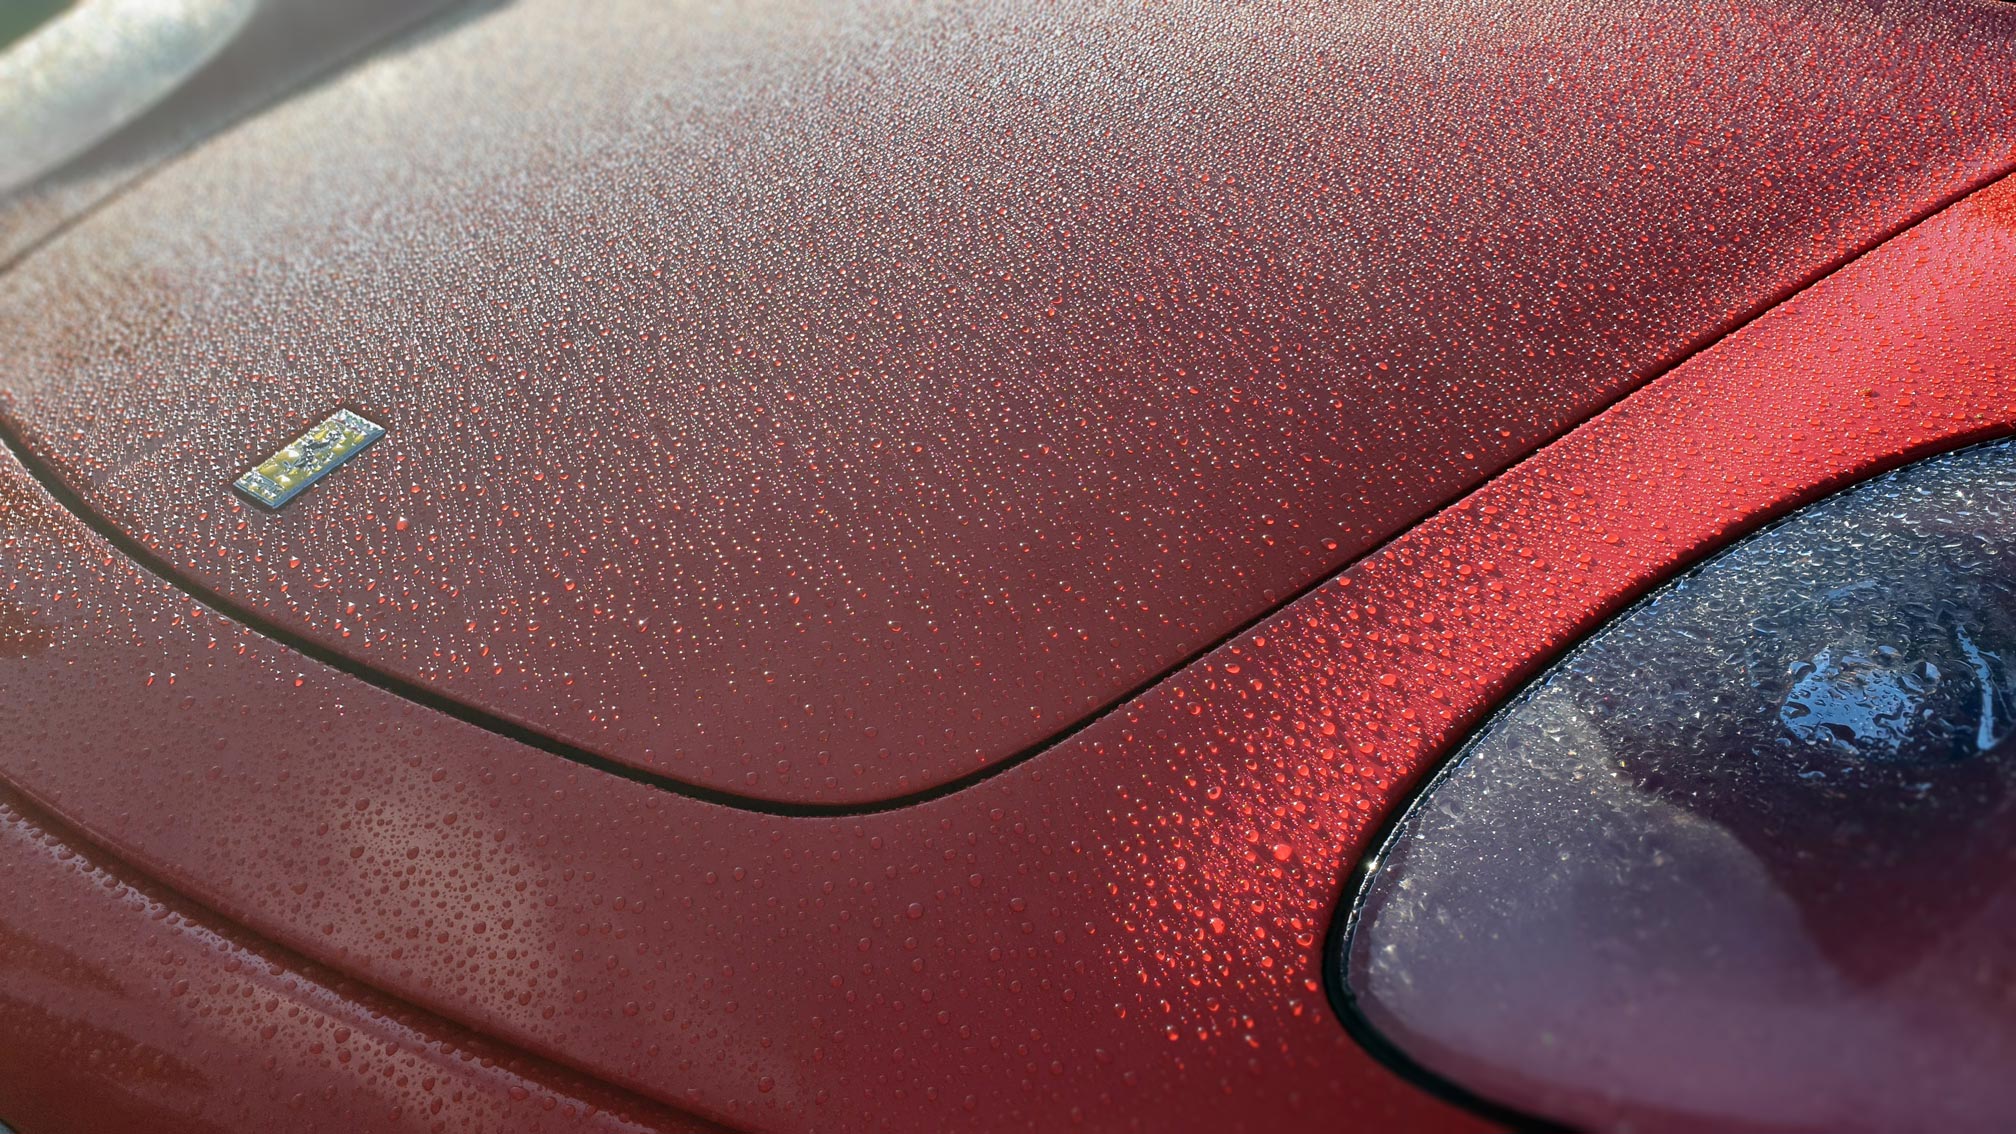 Red Ferrari hood with raindrops